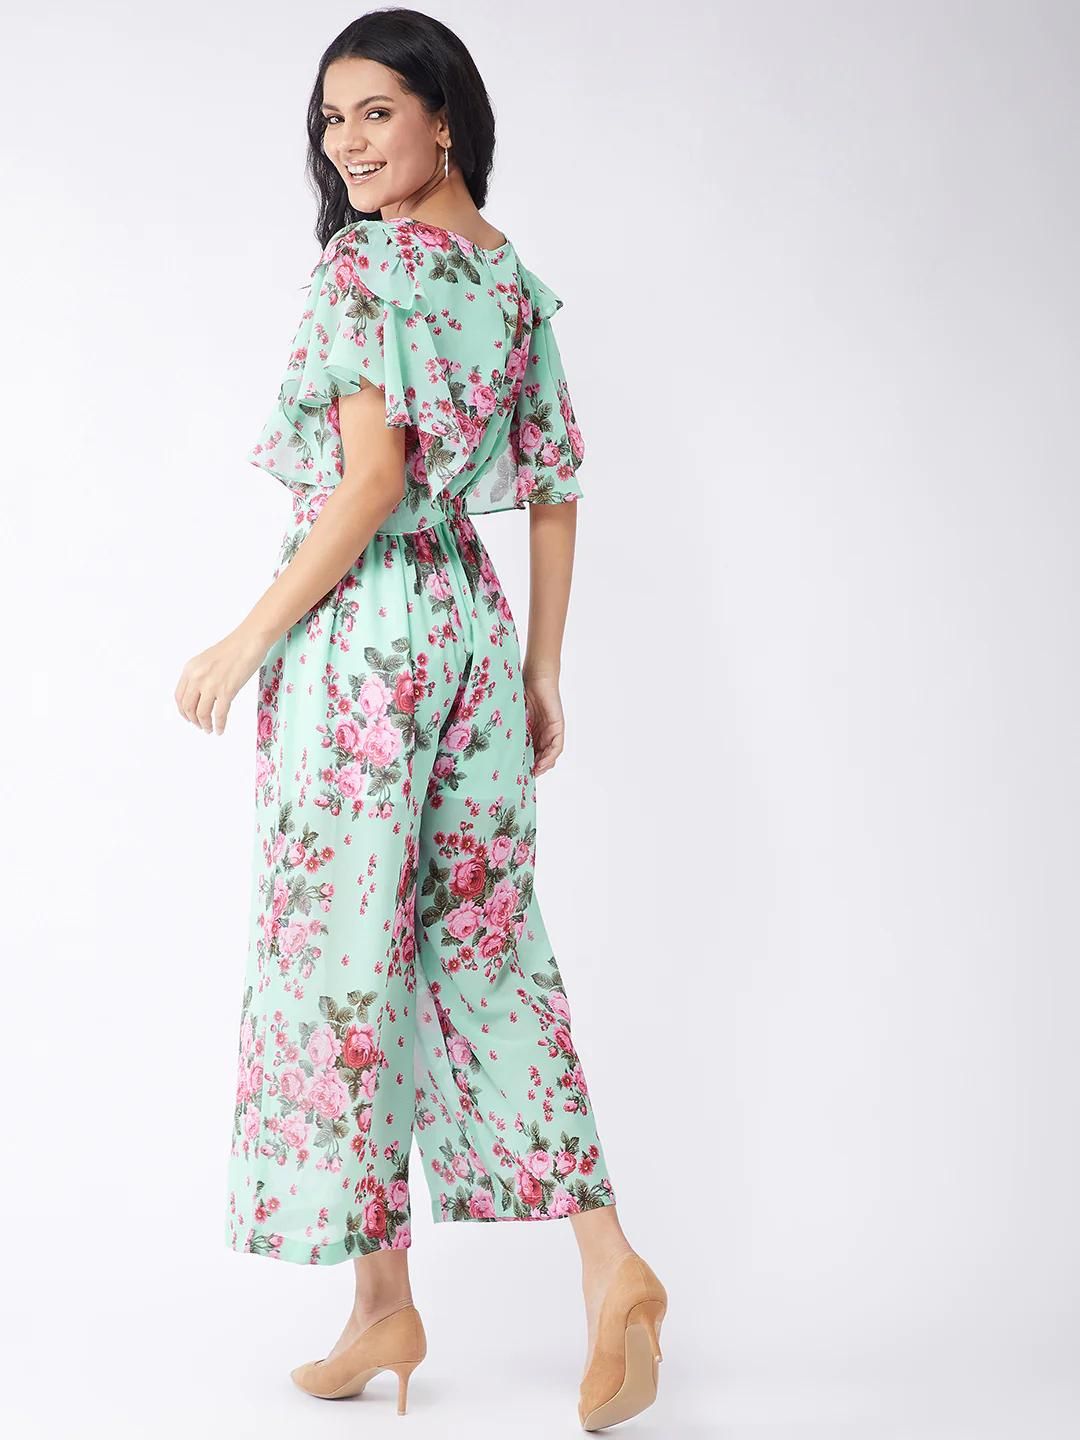 PANNKH Pastel Printed Floral Jumpsuit